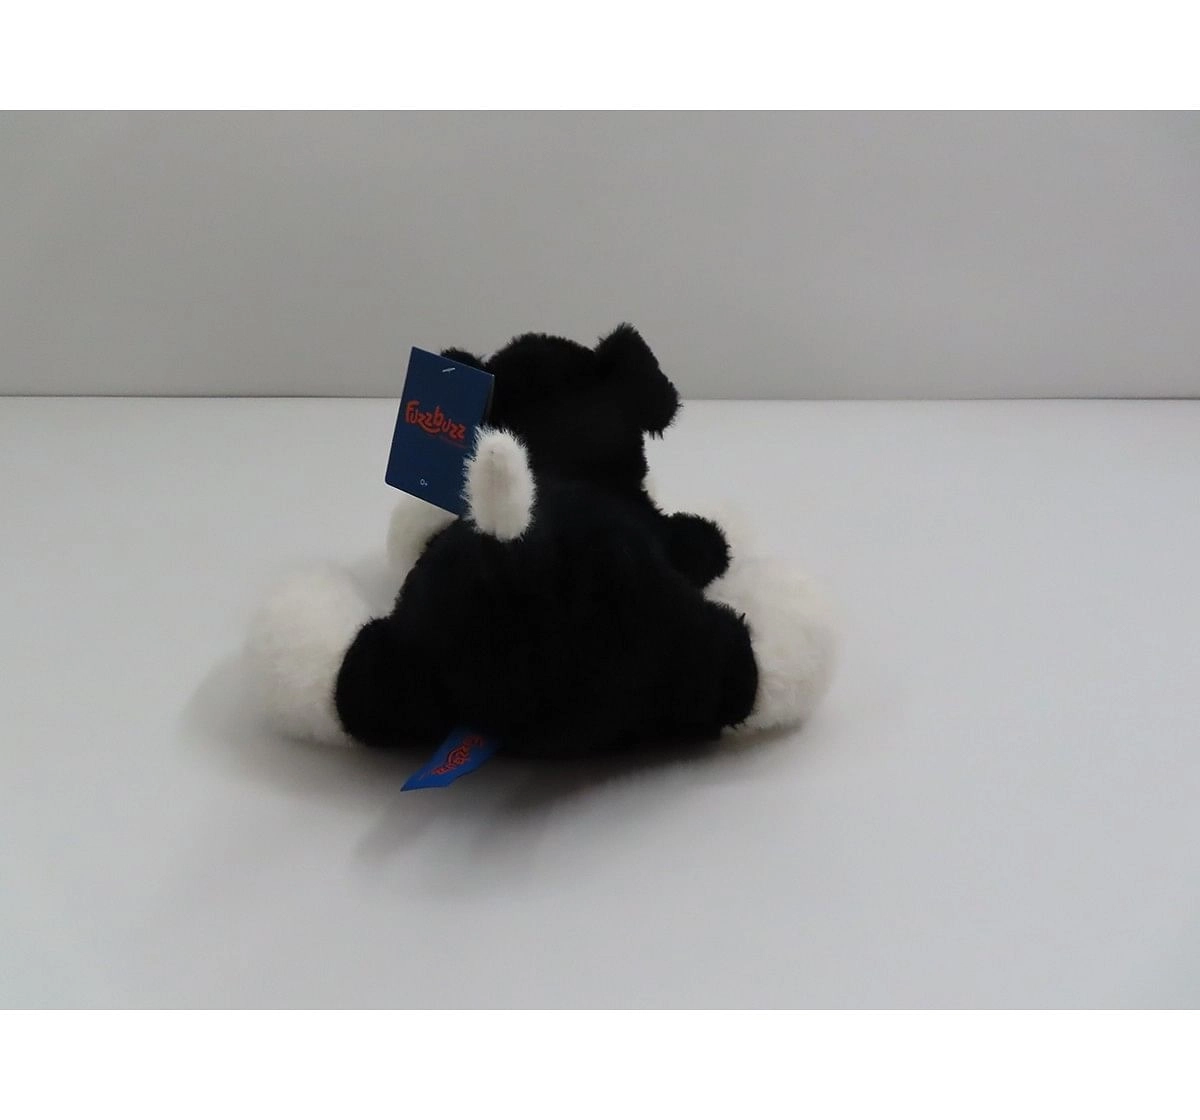 Fuzzbuzz Soft Lying Dog - Black - 33Cm Quirky Soft Toys for Kids age 0M+ - 15 Cm (Black)